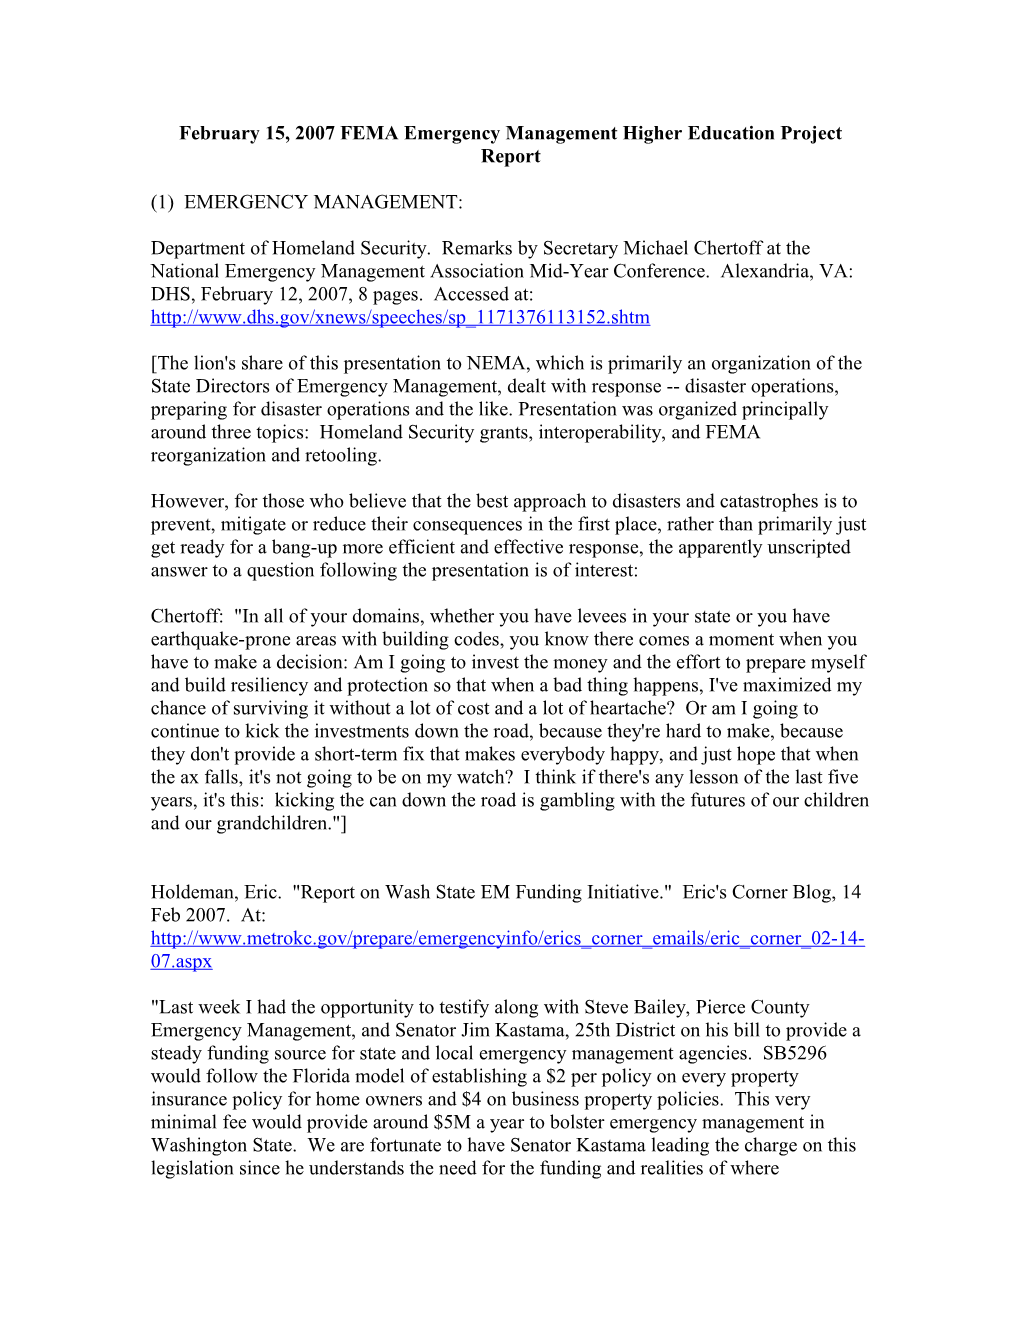 February 15, 2007 FEMA Emergency Management Higher Education Project Report